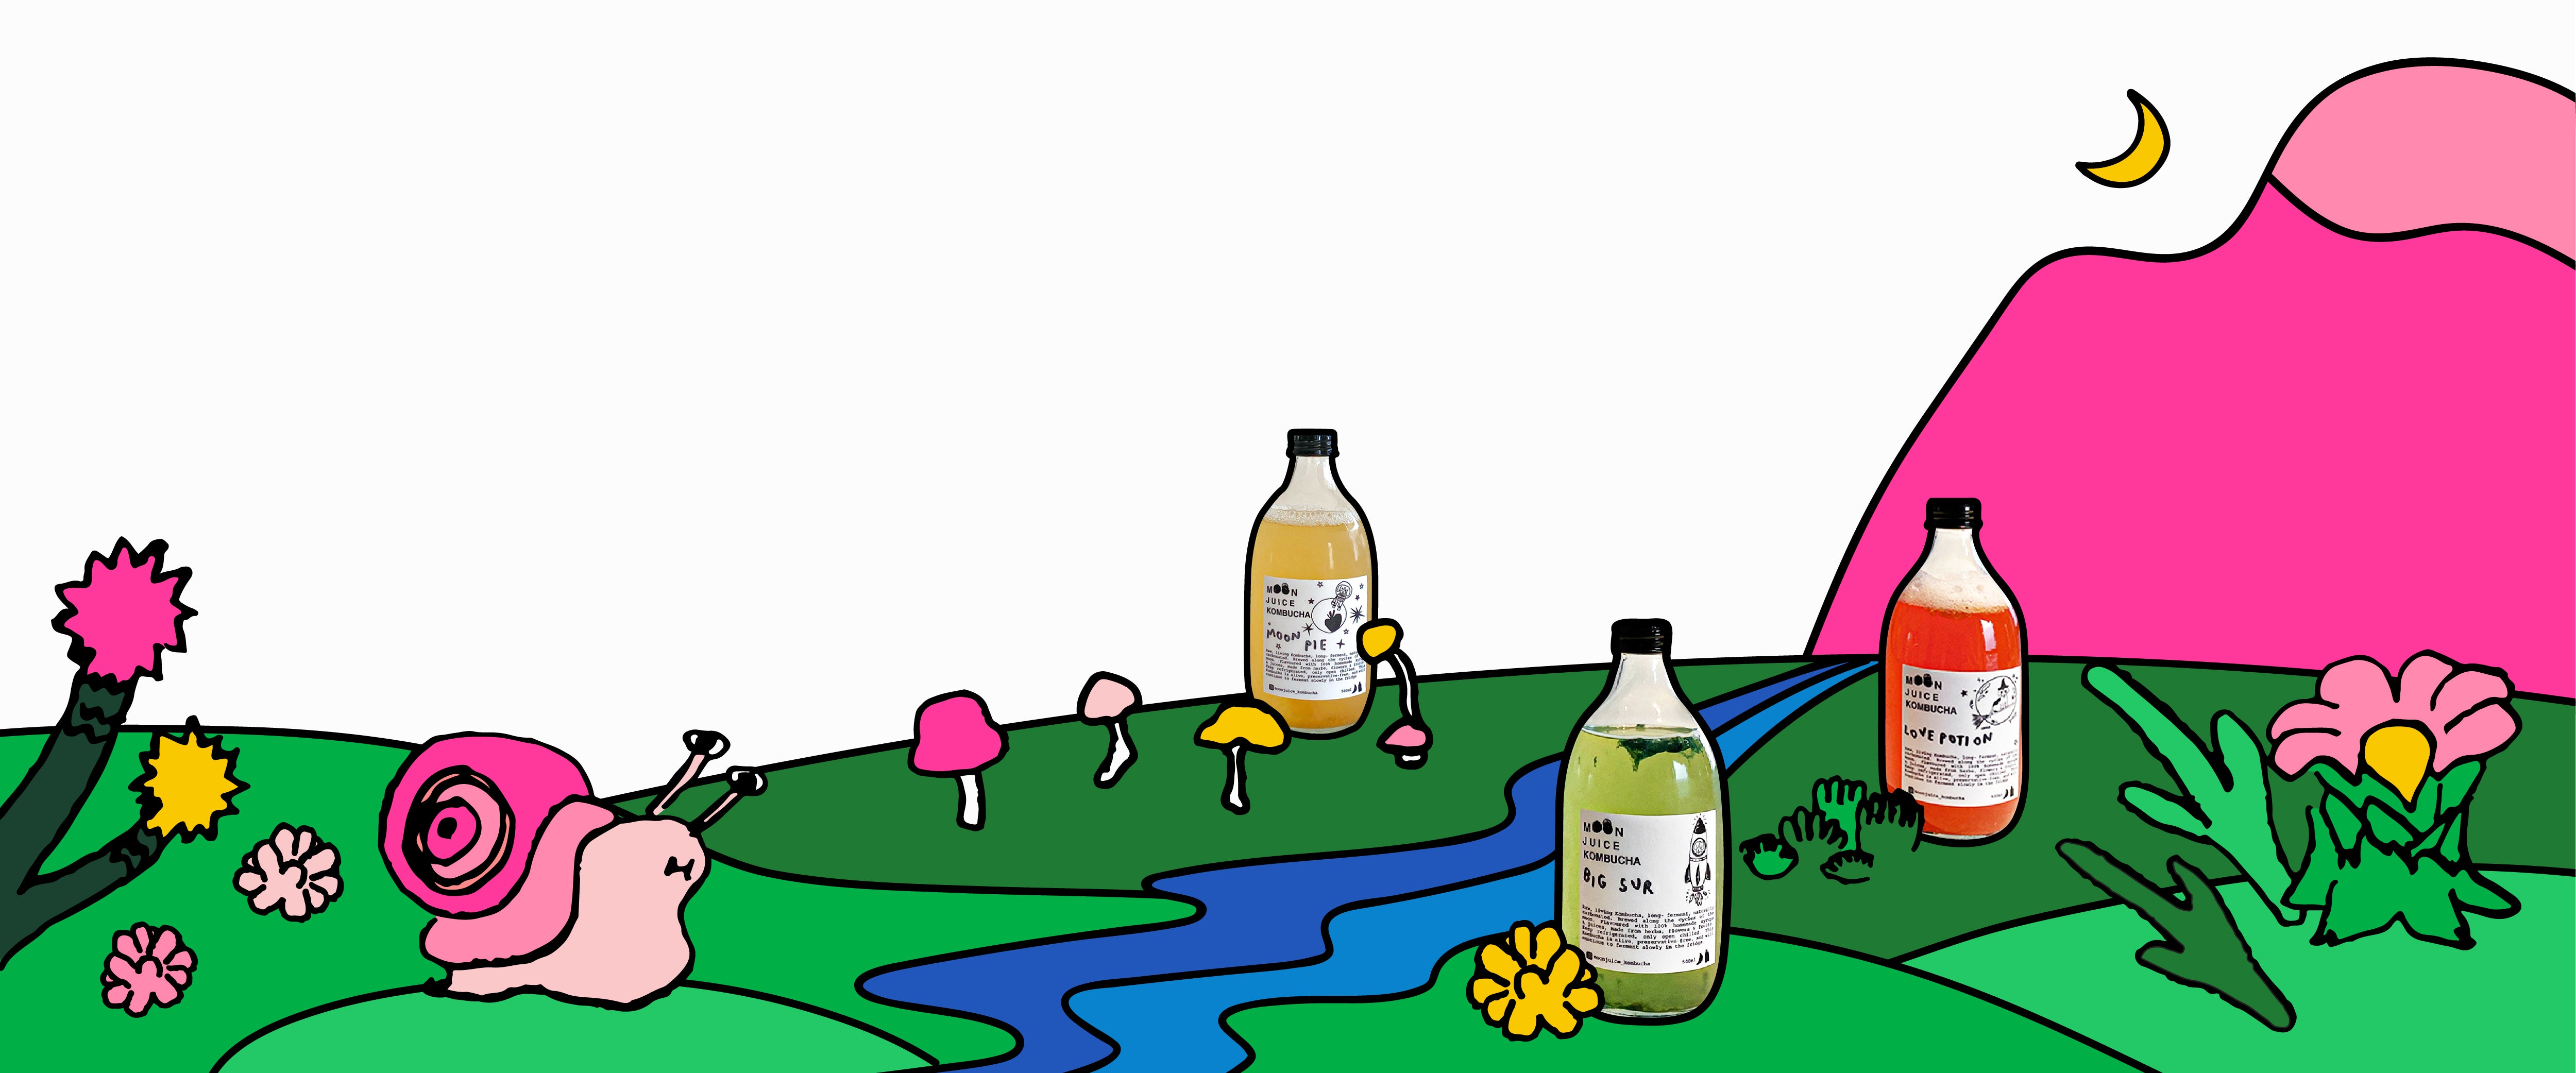 Landscape with kombucha bottles, mushrooms, plants & snails